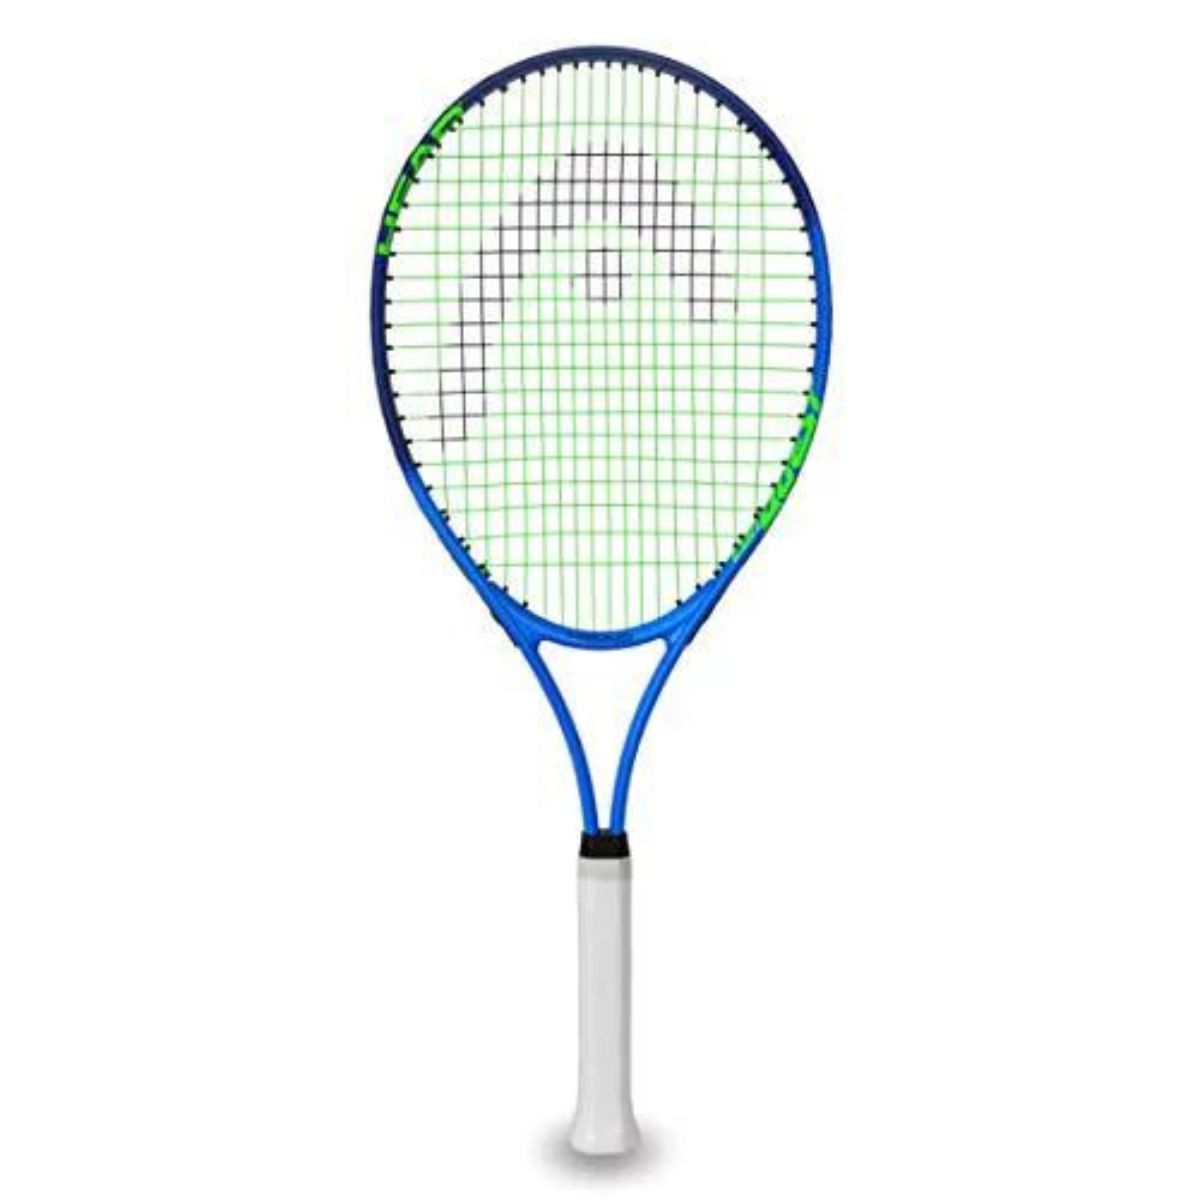 The Best Tennis Rackets Under $50 Option: HEAD Ti. Conquest Tennis Racket